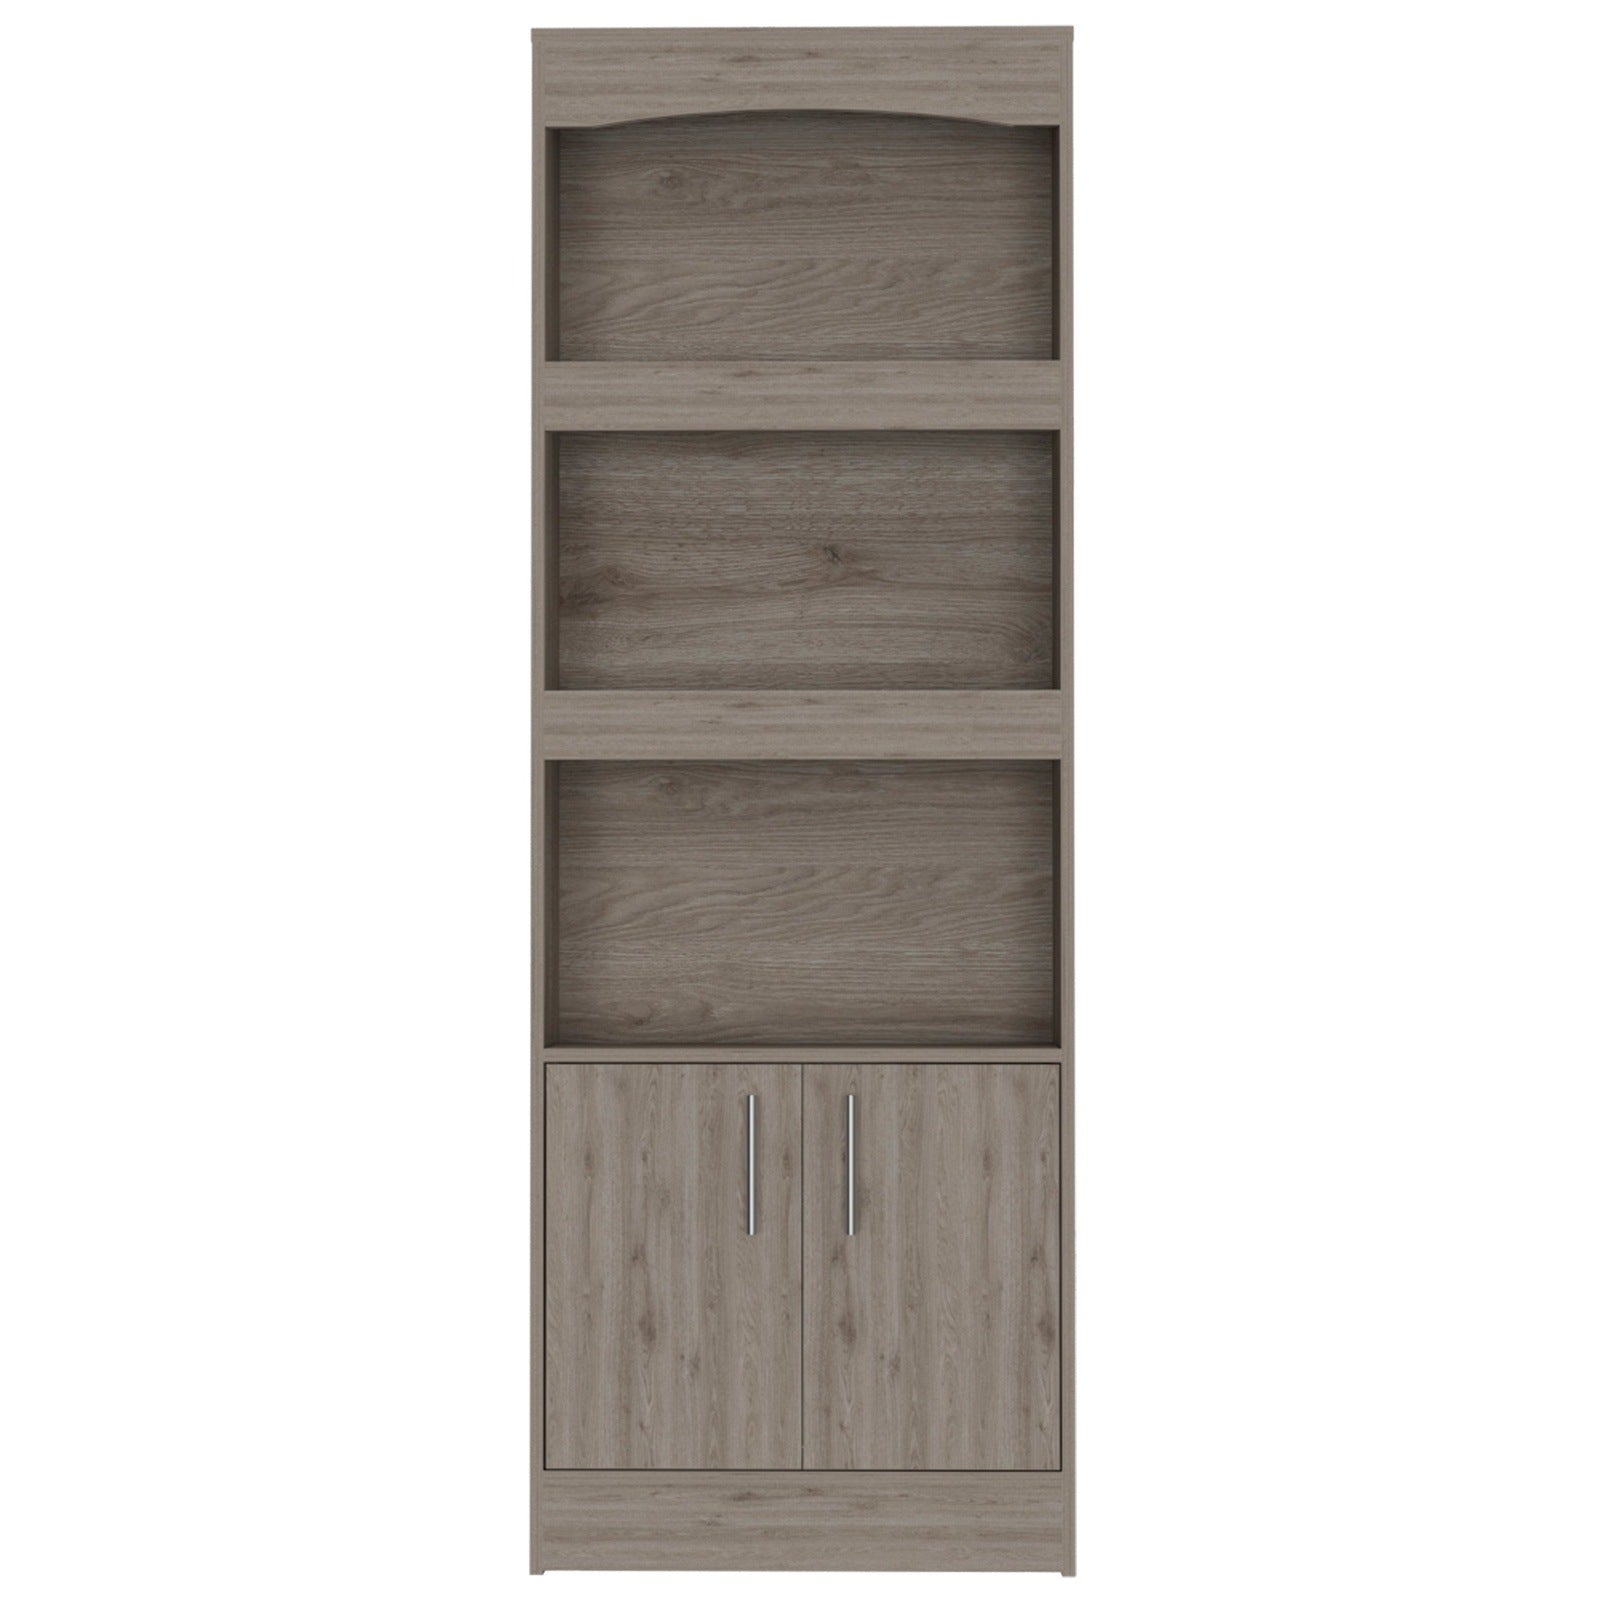 Durango 3-Shelf Double Door Bookcase - Beige